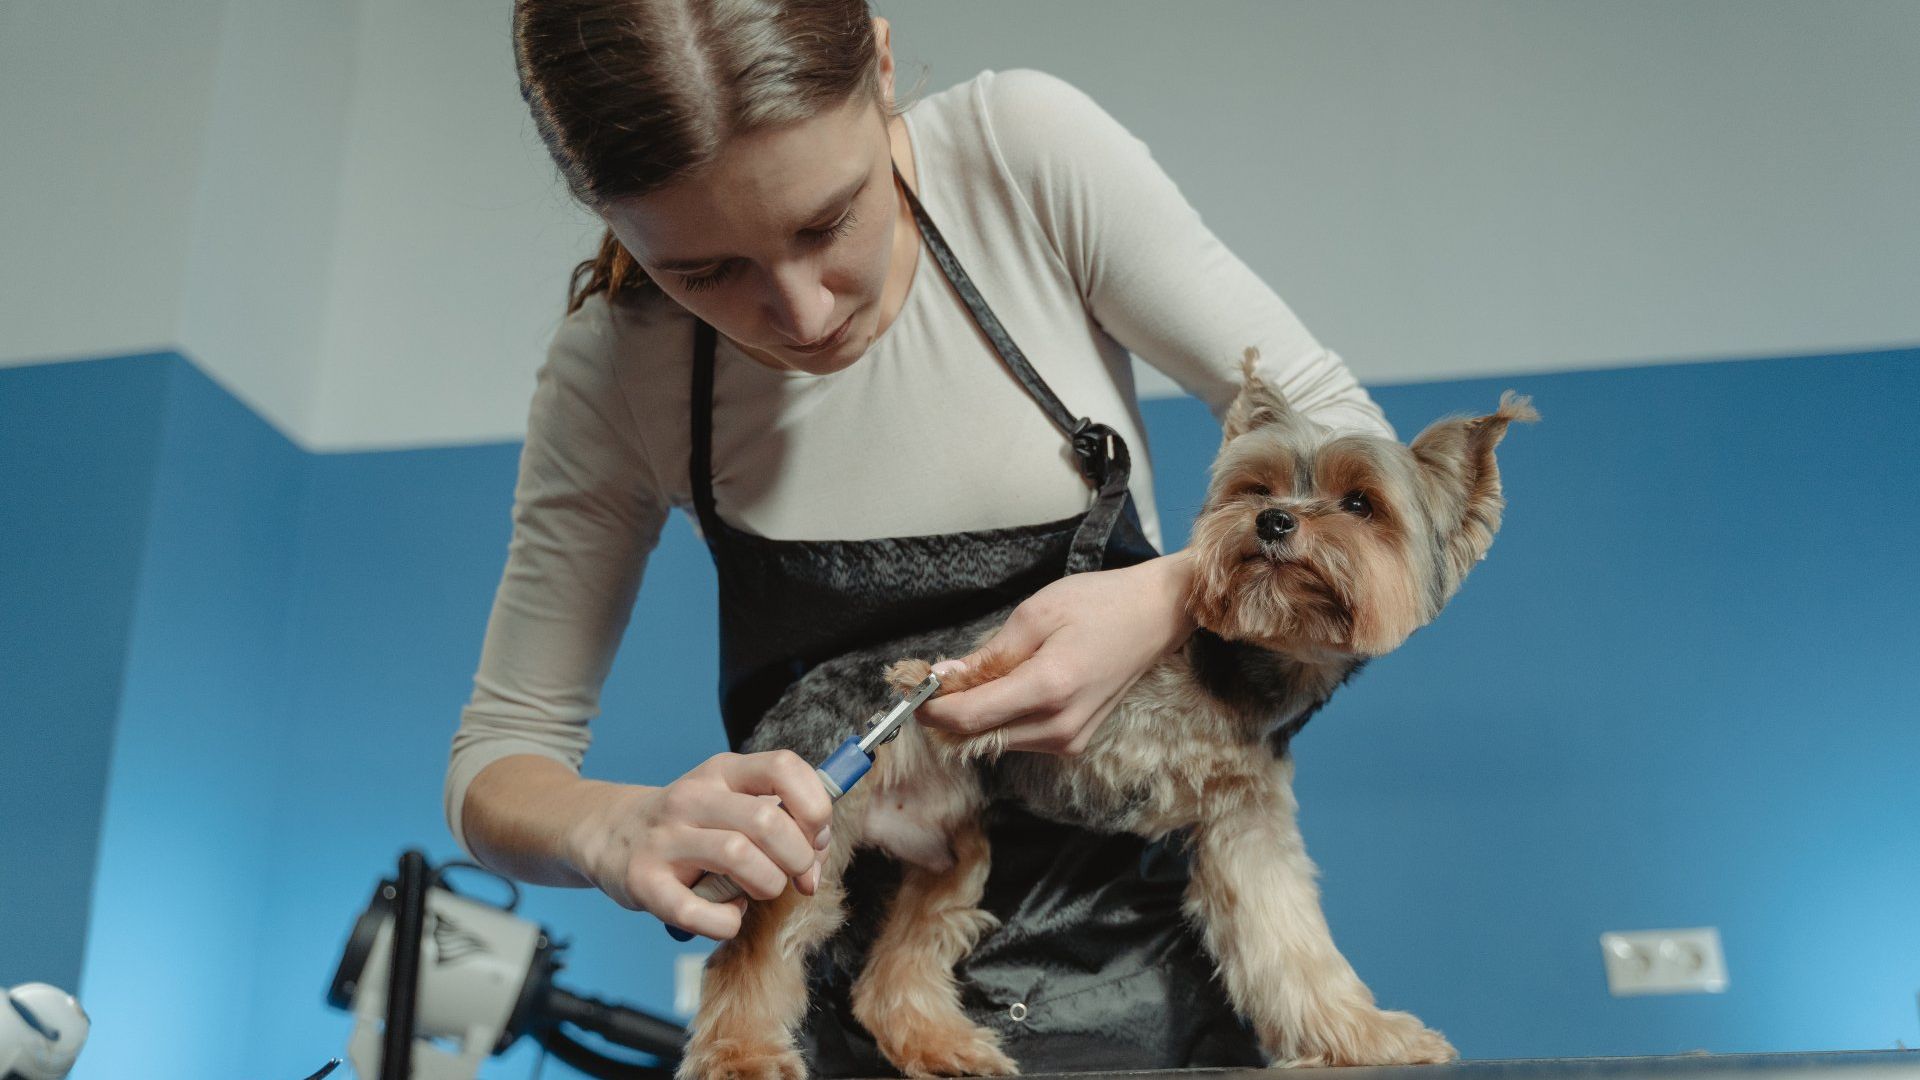 Pet groomer cutting dog hair